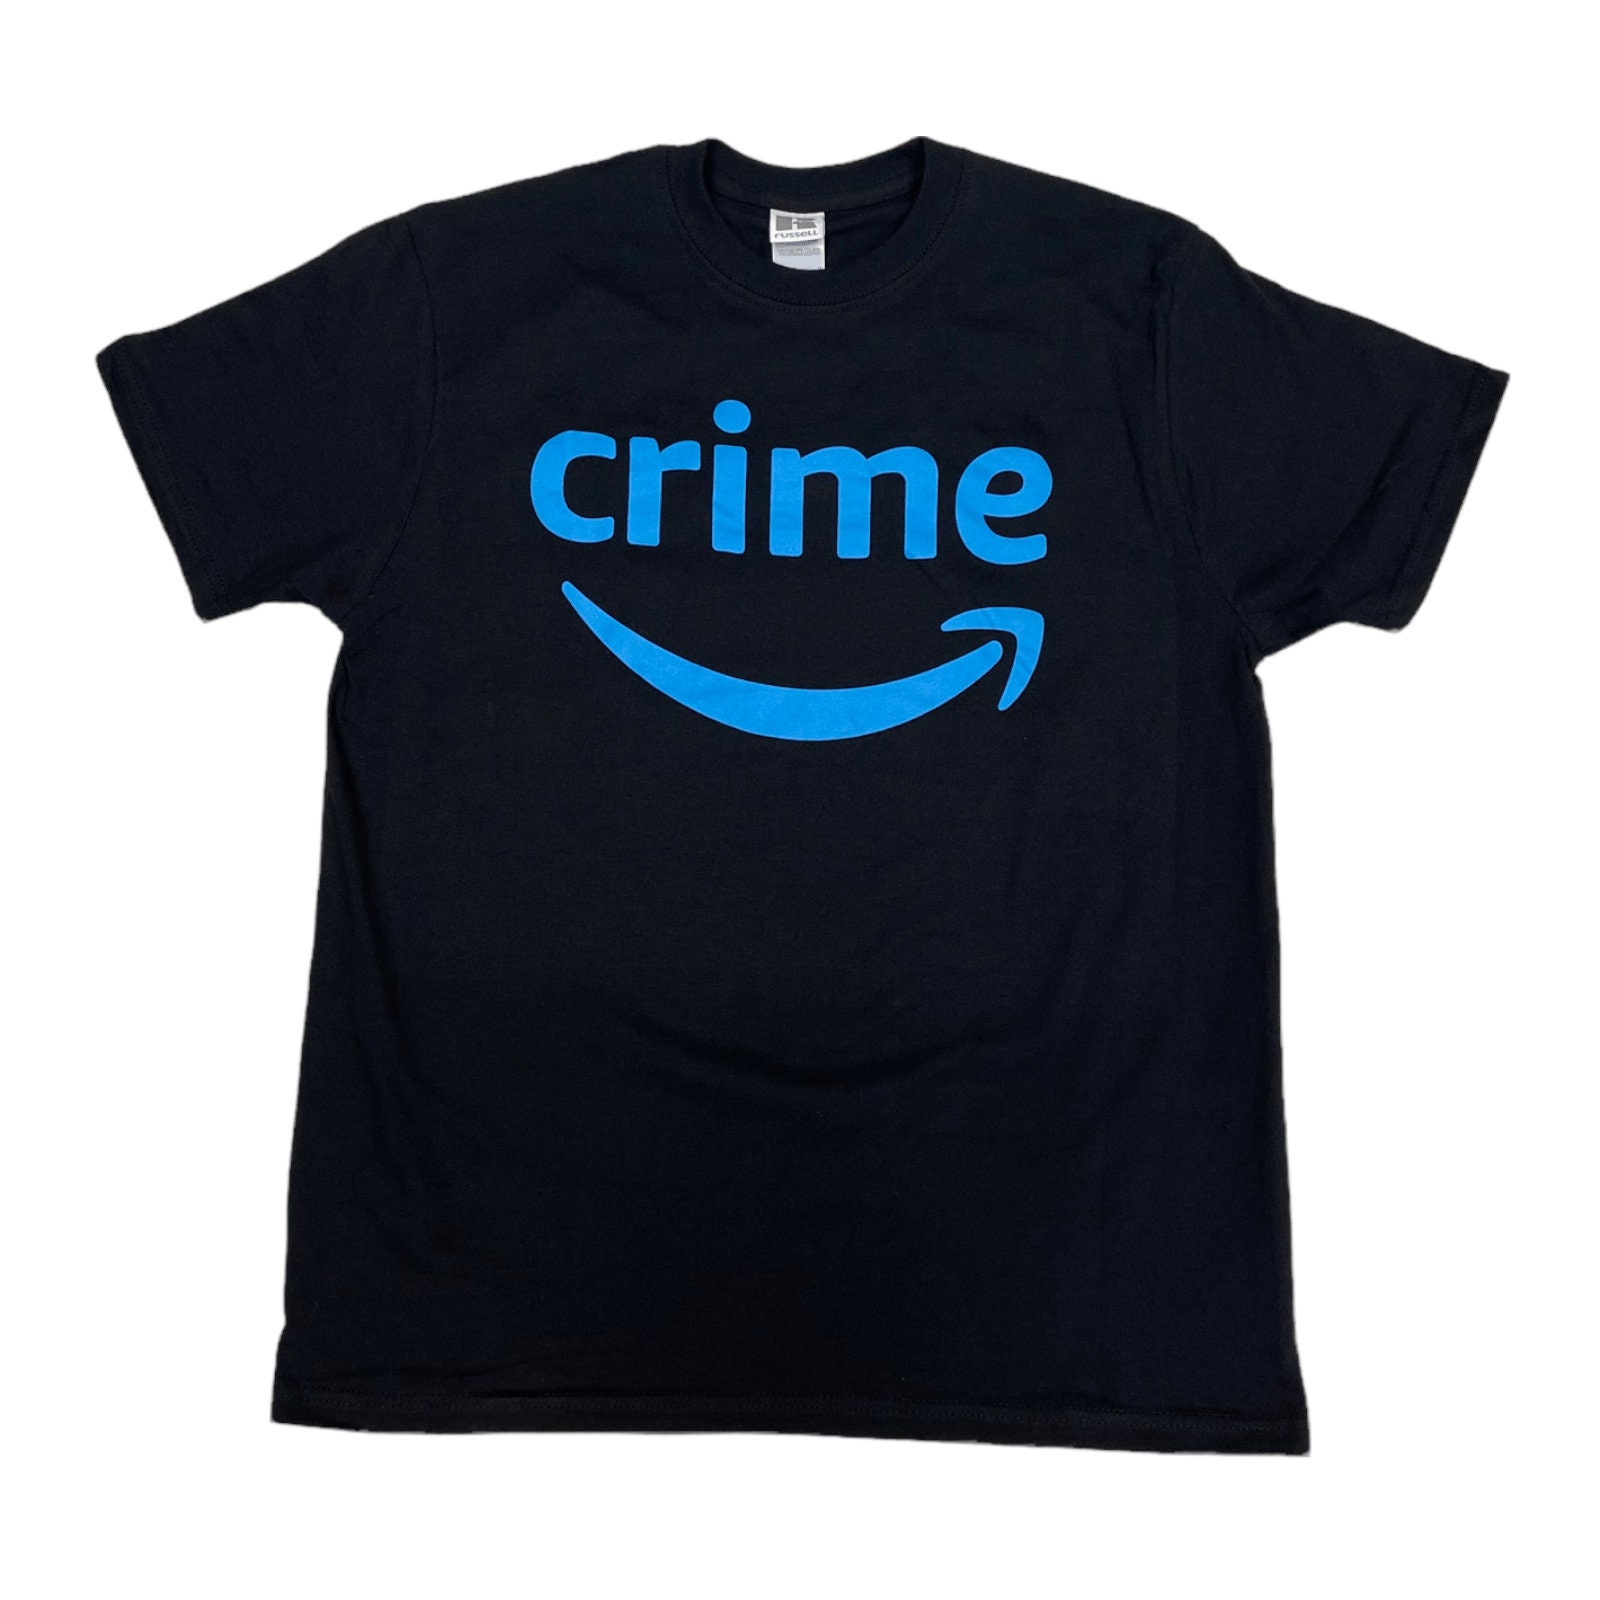 Amazon Prime Crime T-shirt Black Graphic Tee - Etsy